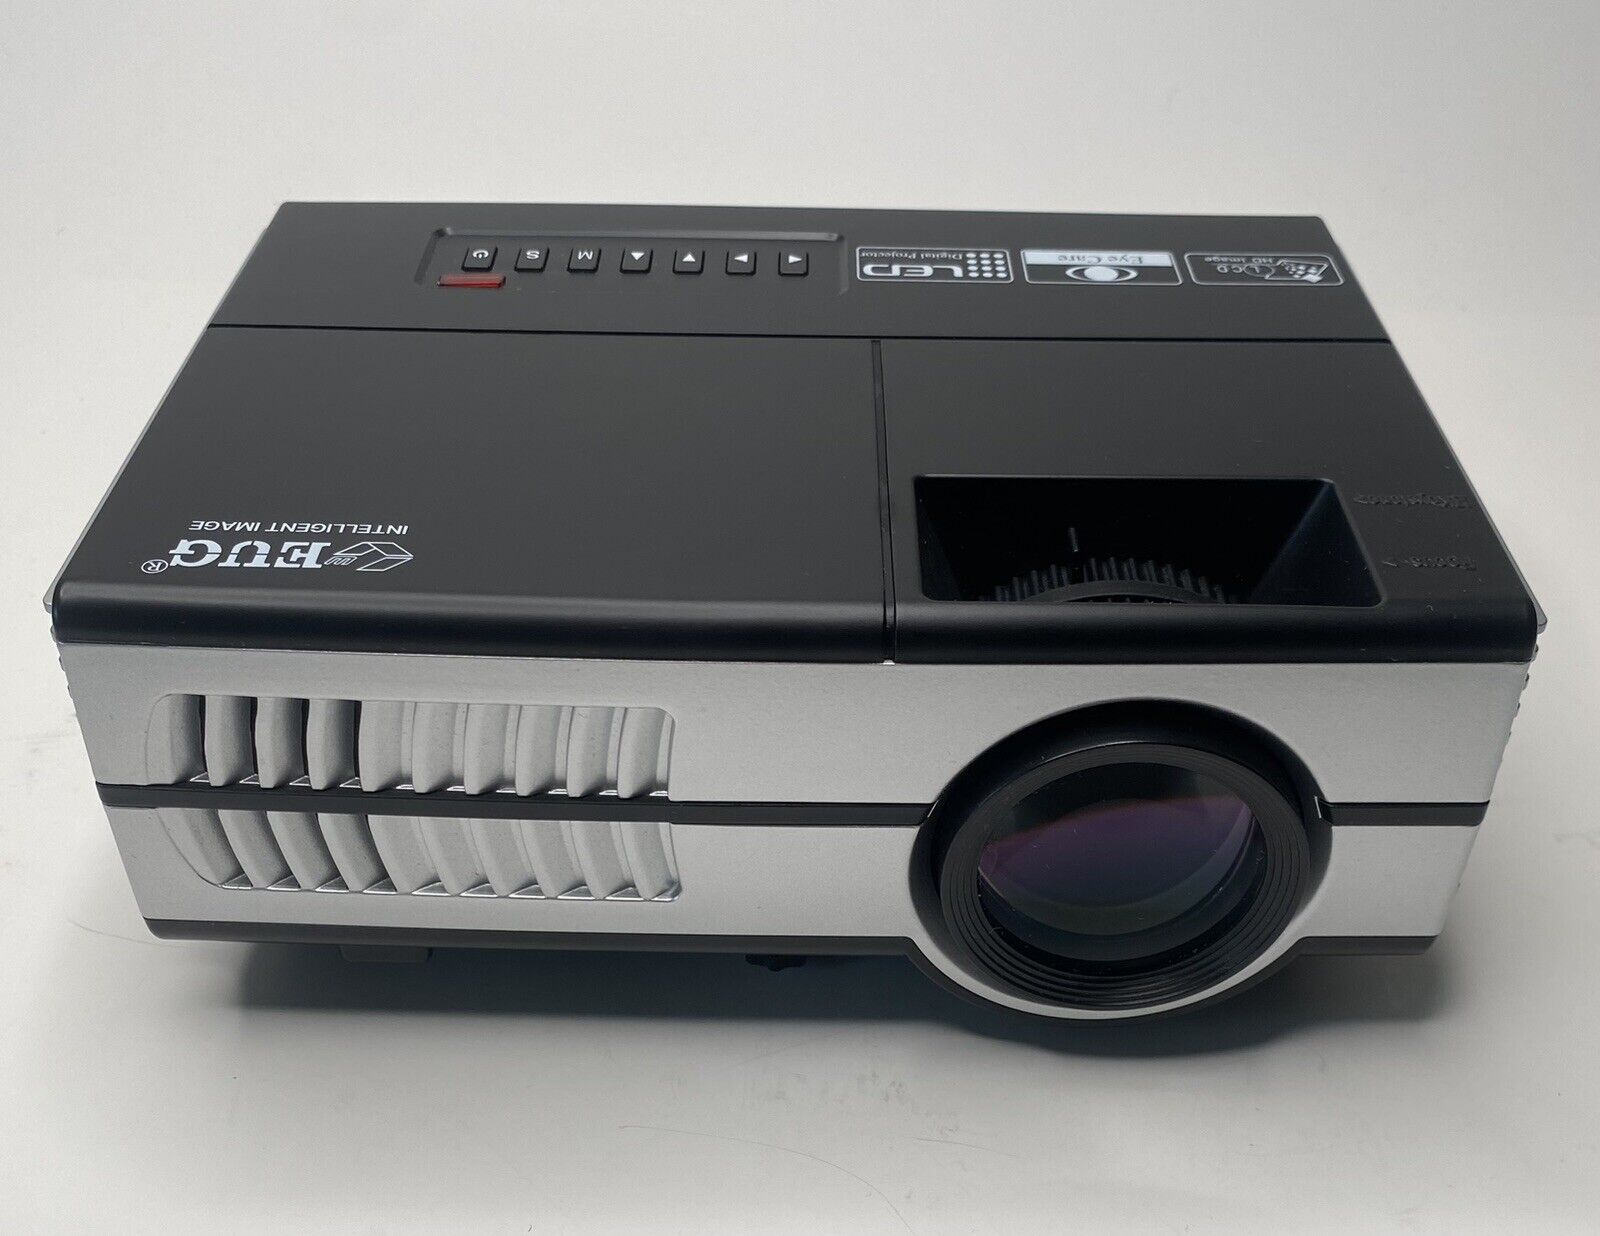 EUG 600D EUG Pocket Mini Projector HD 1080p Support 1500 Lumen Portable TESTED